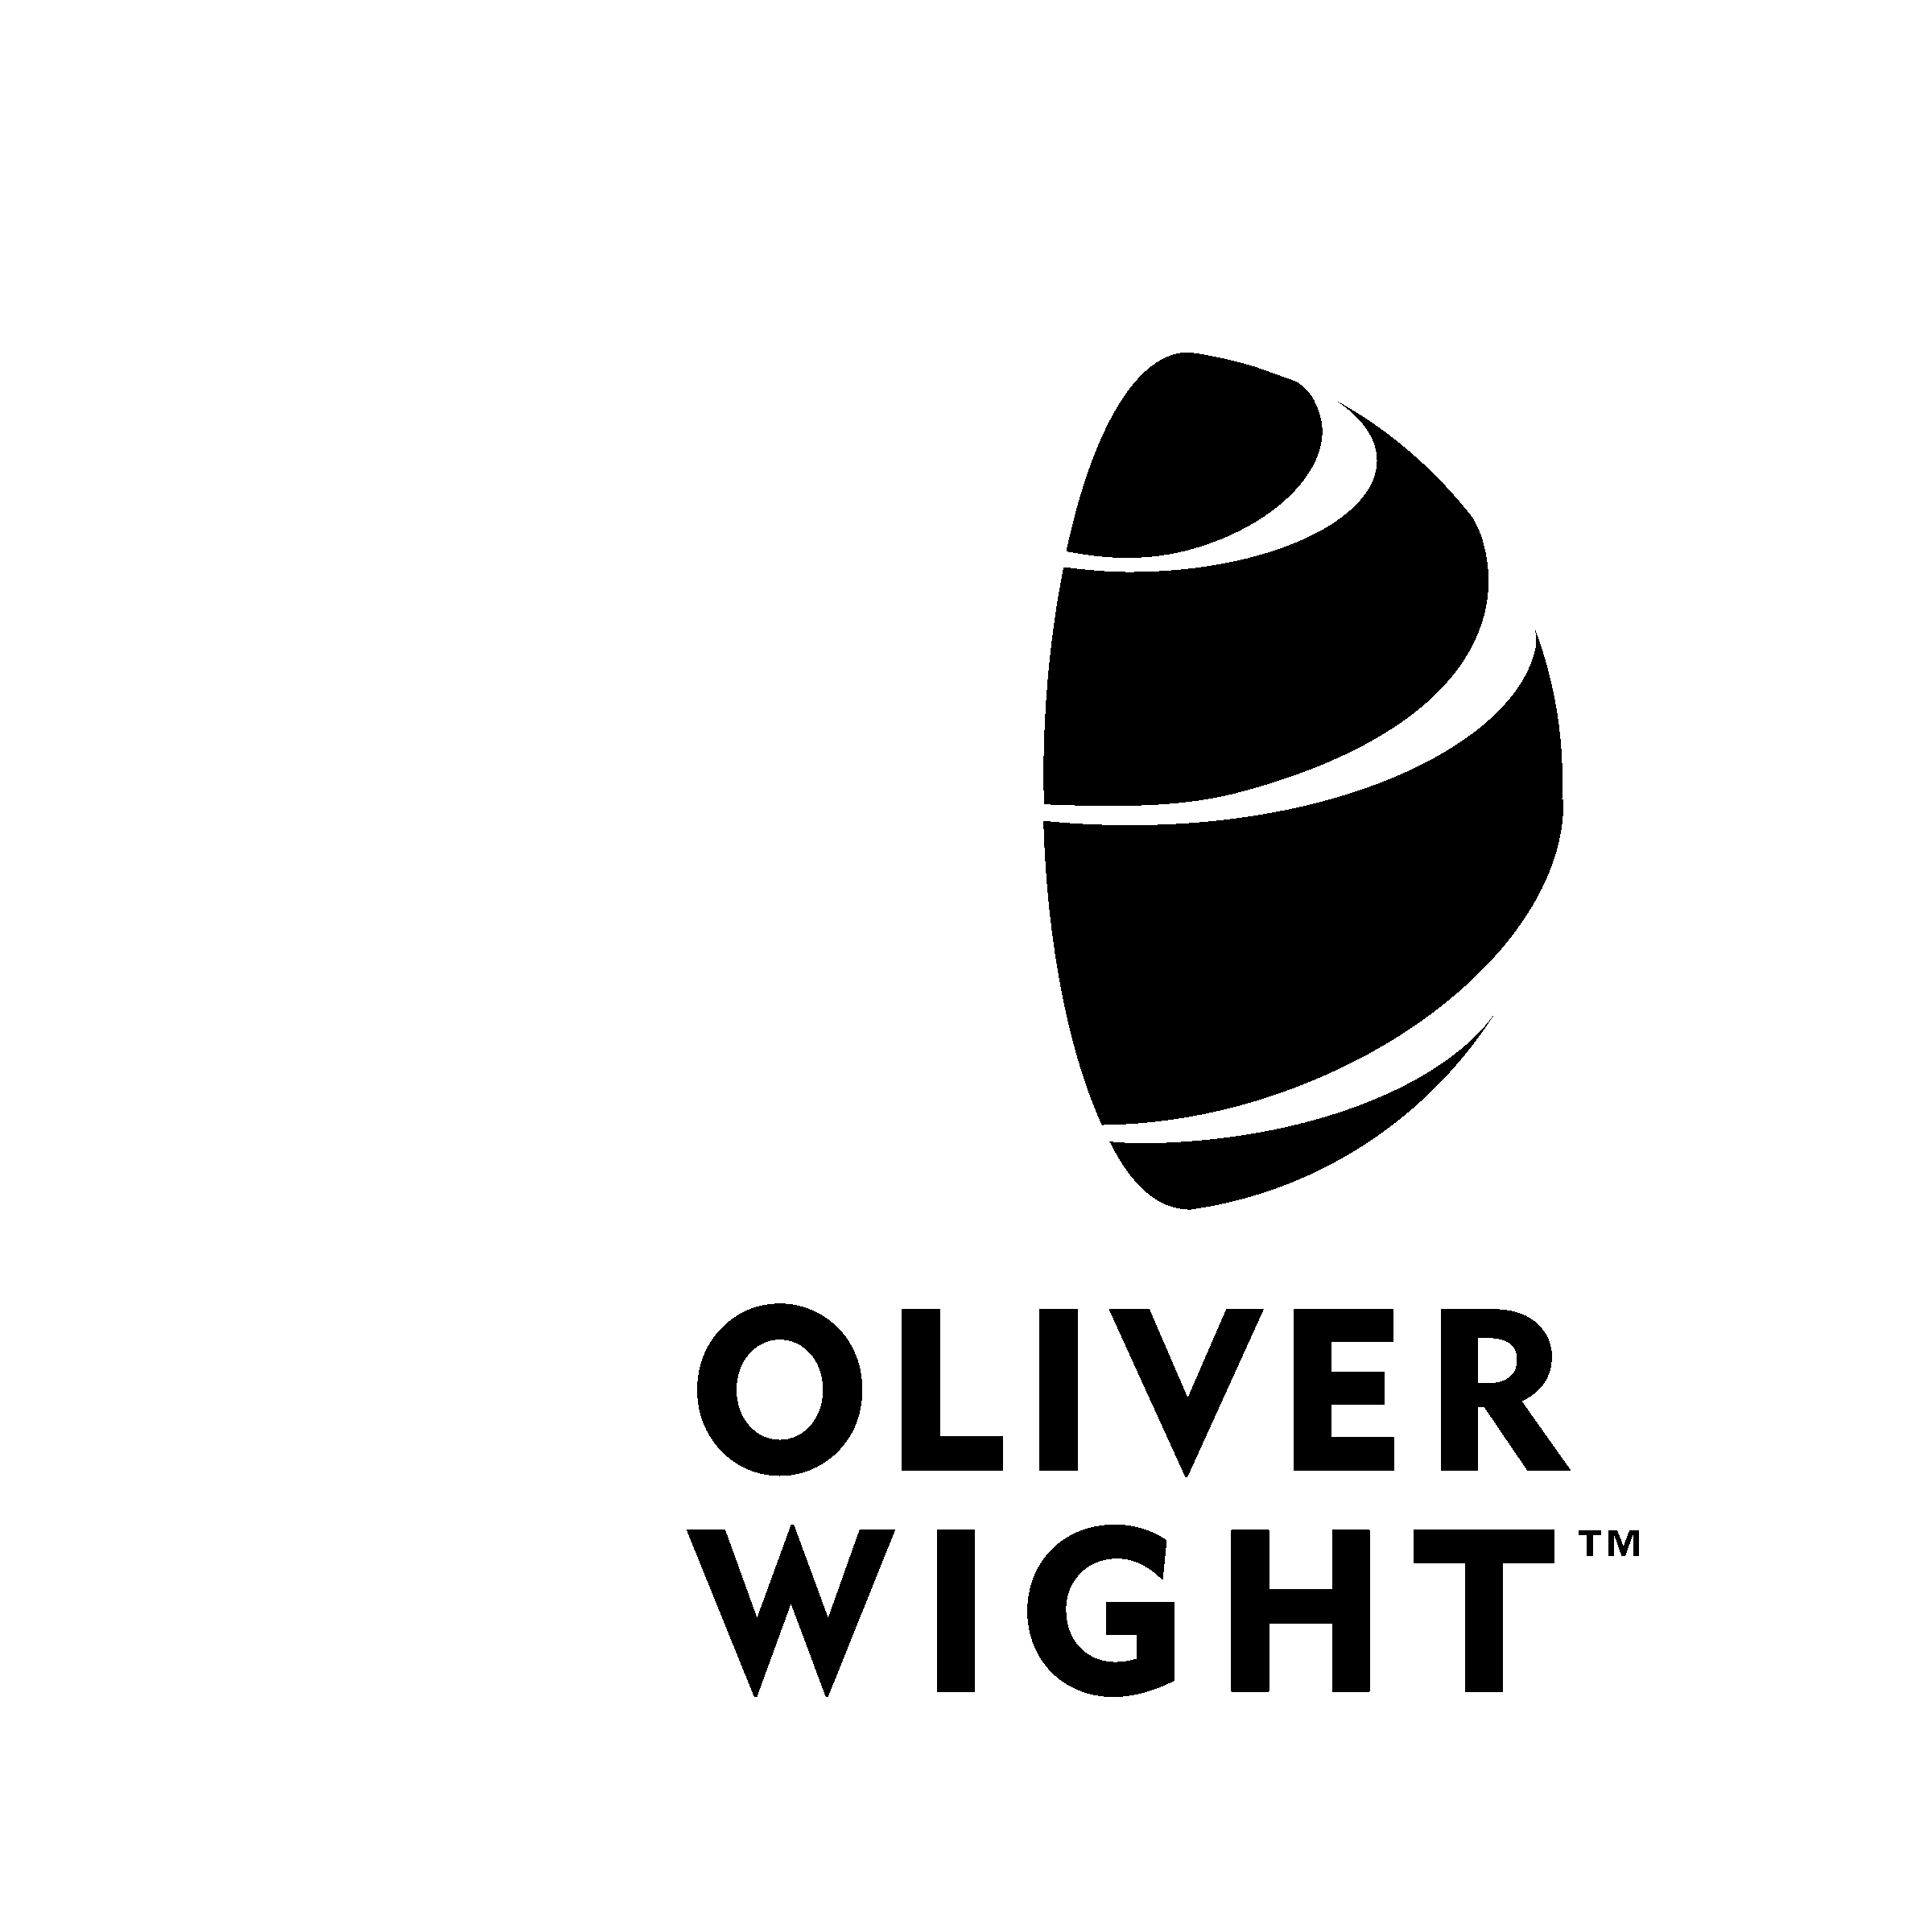 Black and Wight Logo - Oliver Wight Logo PNG Transparent & SVG Vector - Freebie Supply